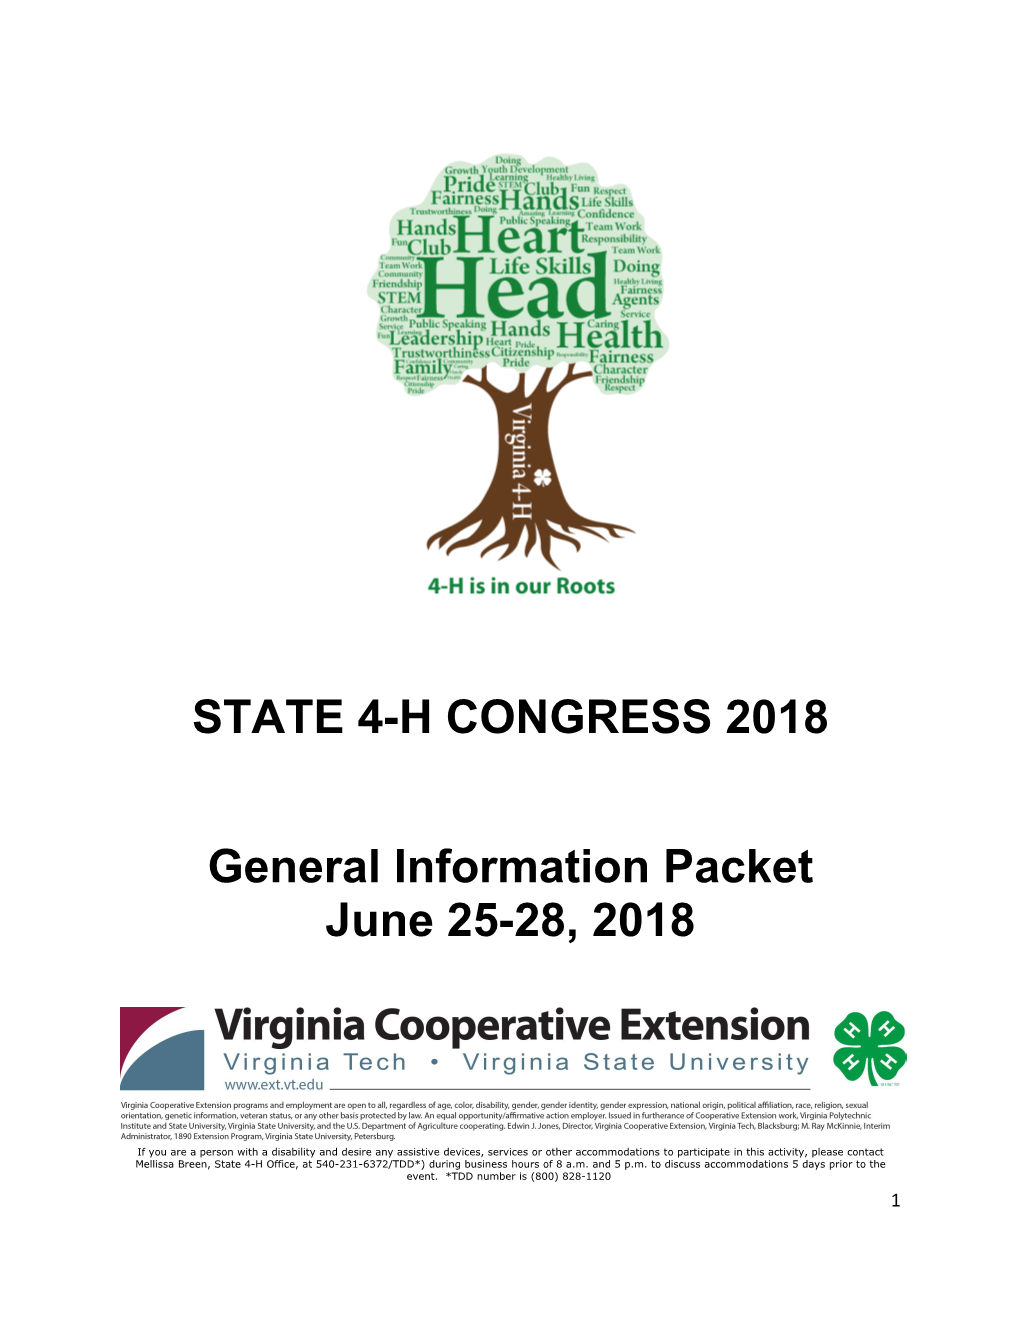 State 4-H Congress 2018